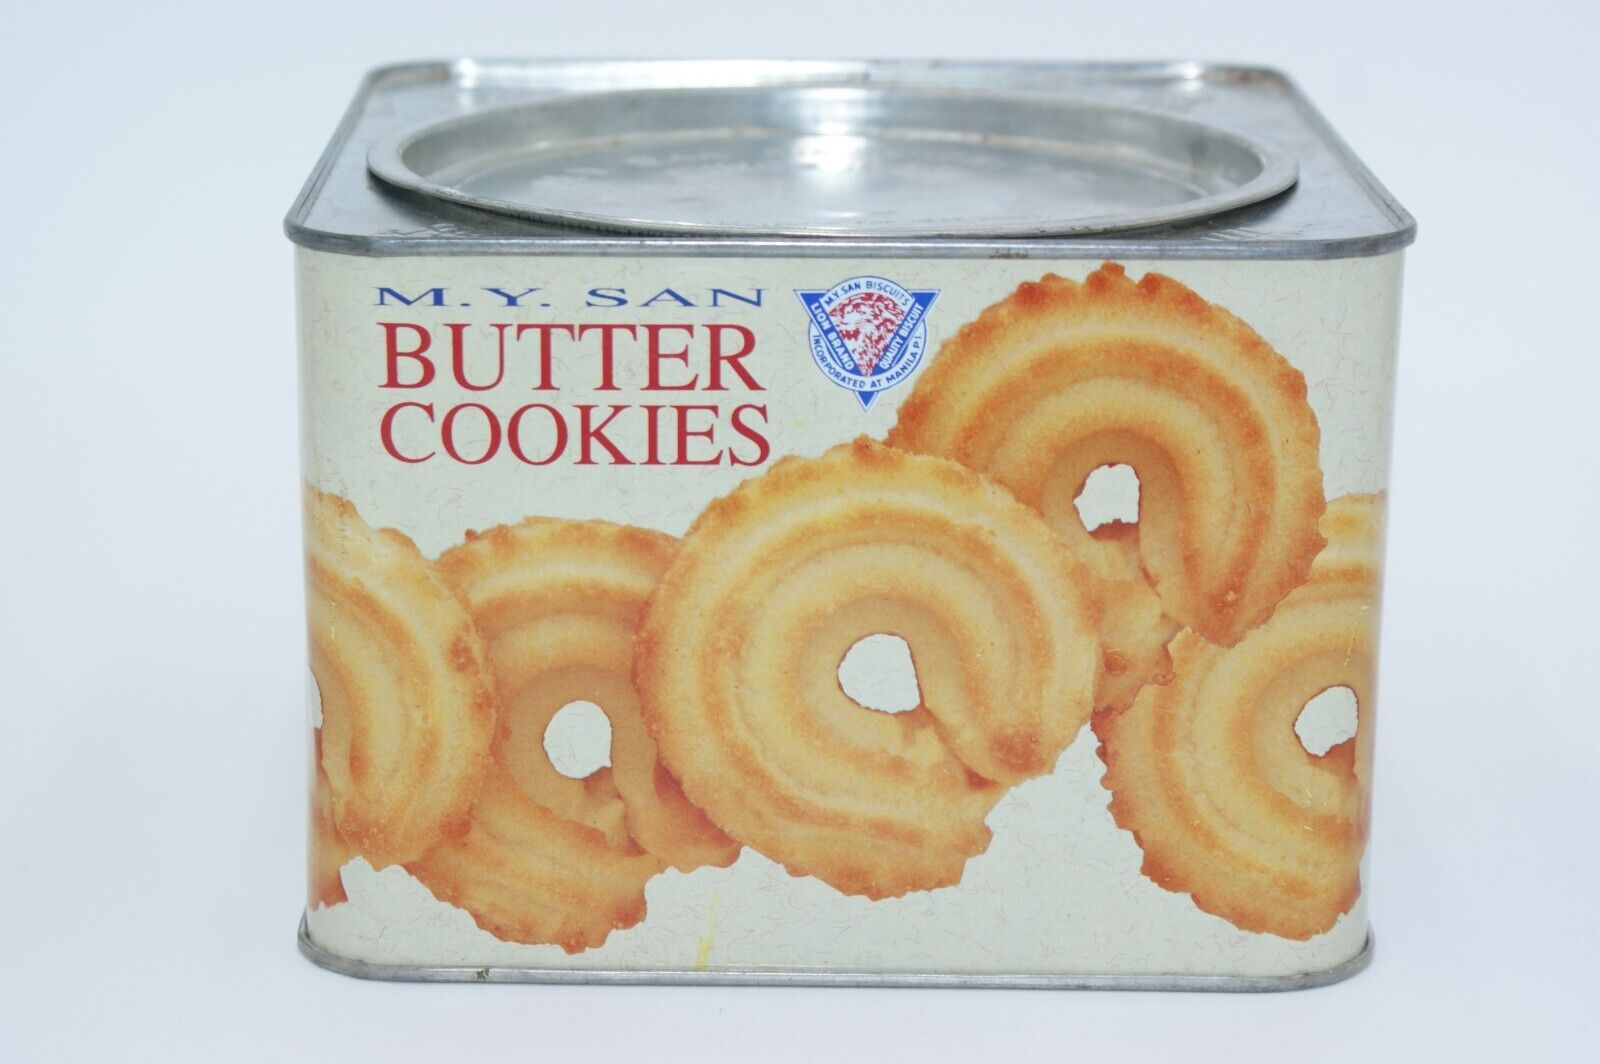 1997 Vintage My San Butter Cookies Tin - M.Y. San Biscuits, Empty